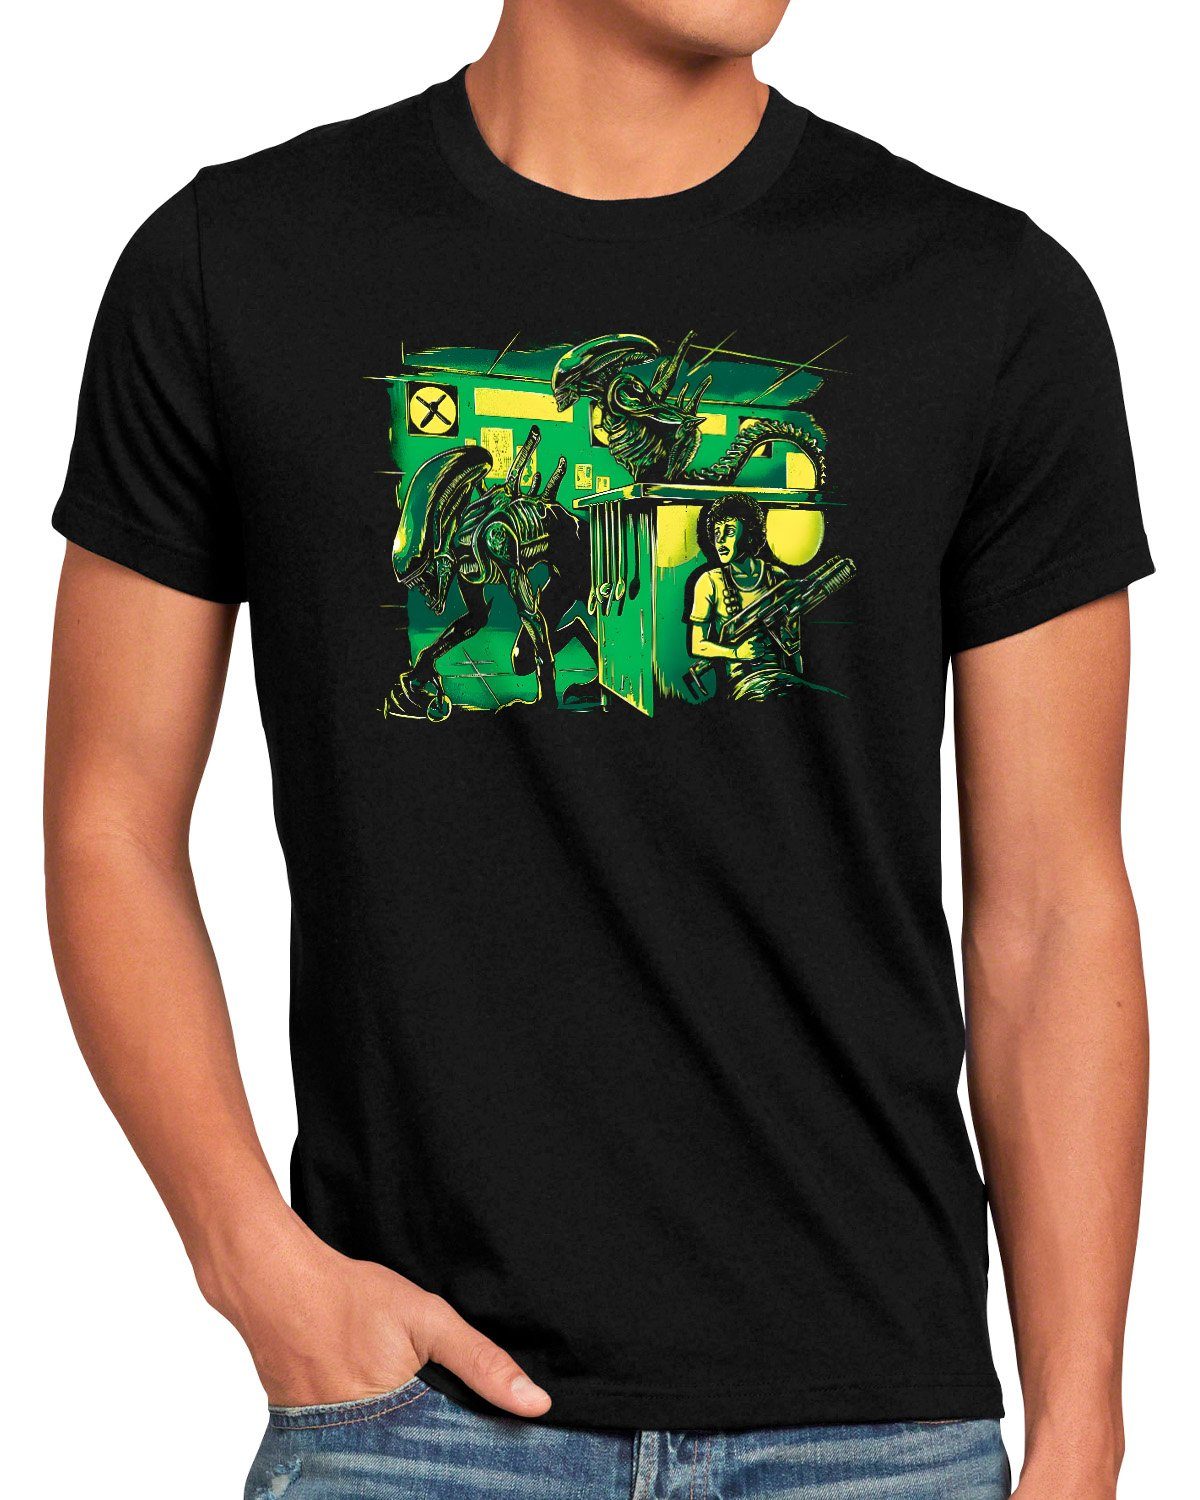 ridley scott the style3 xenomorph T-Shirt predator alien Print-Shirt Herren Fear Hide